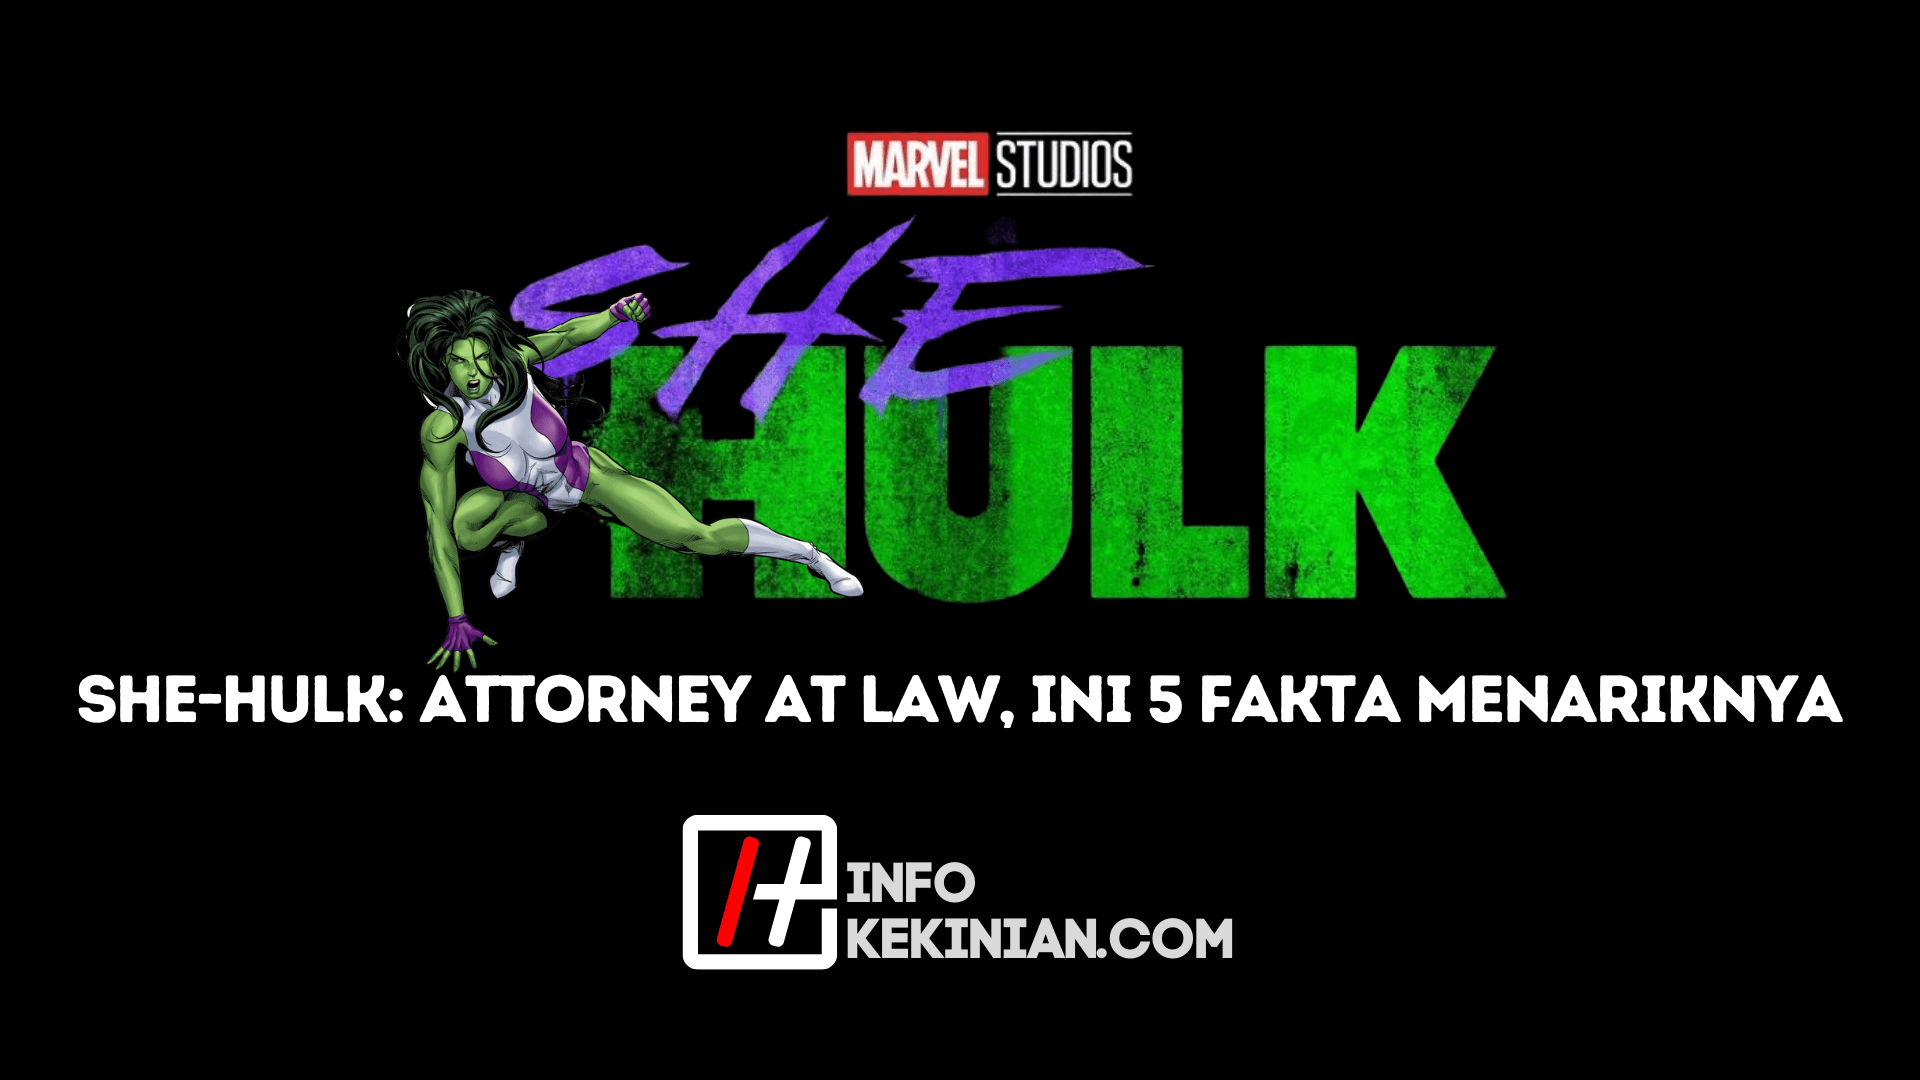 Interesujące fakty o She-Hulk_ Attorney at Law